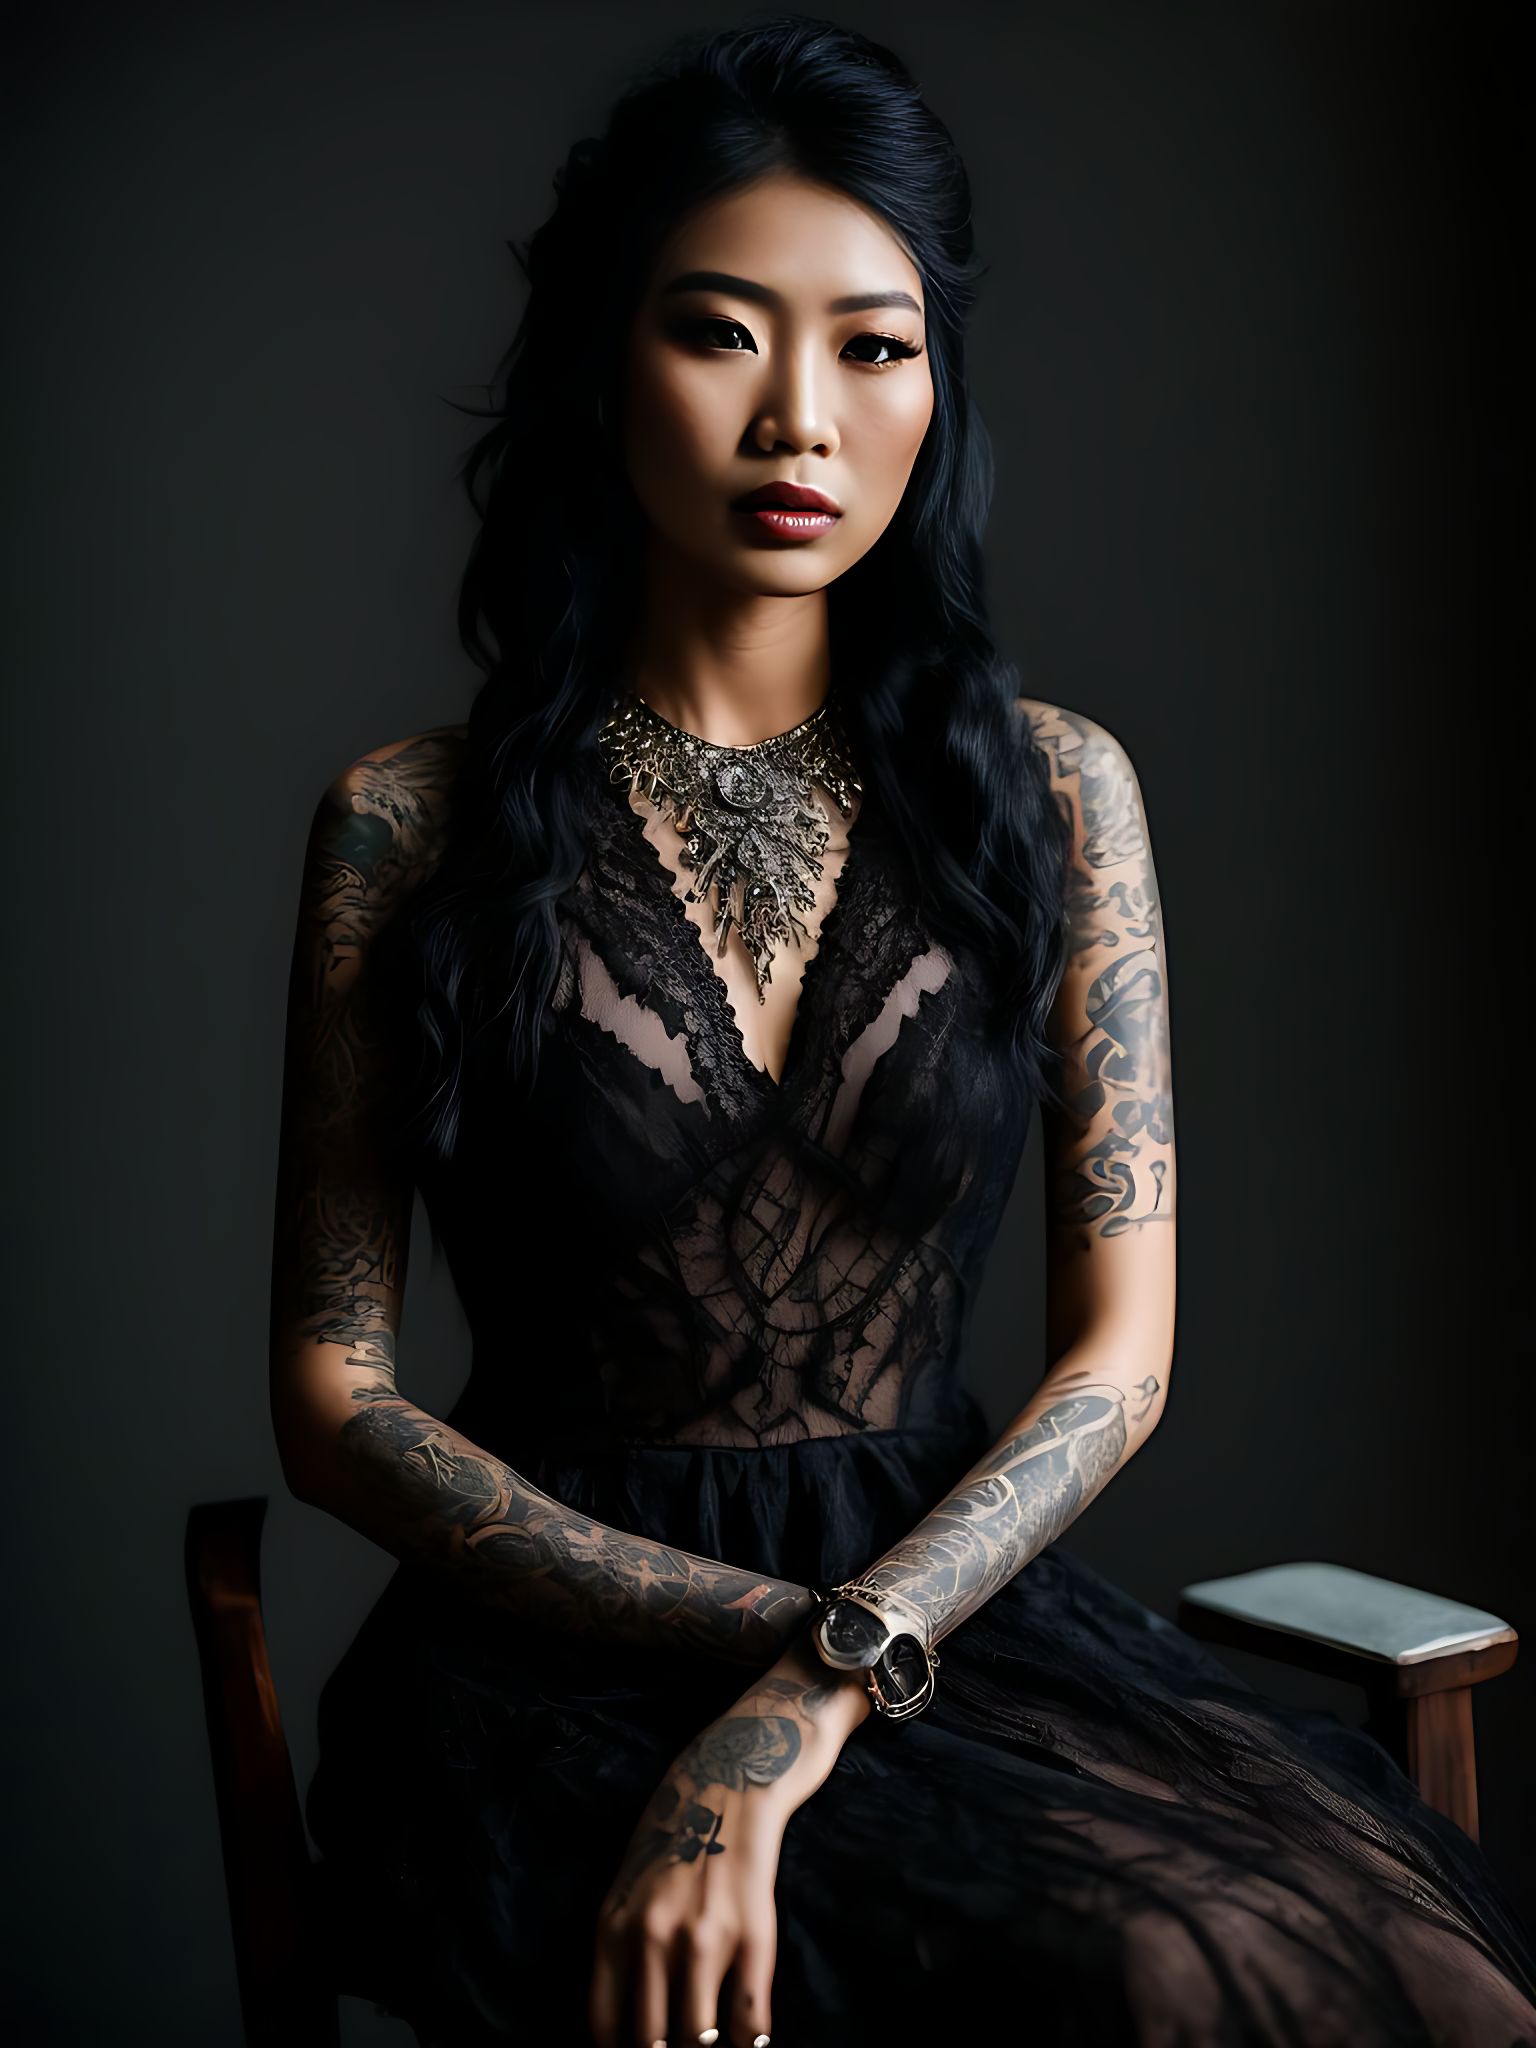 Gothic Glamour: Dark And Moody Tattoos Showcased